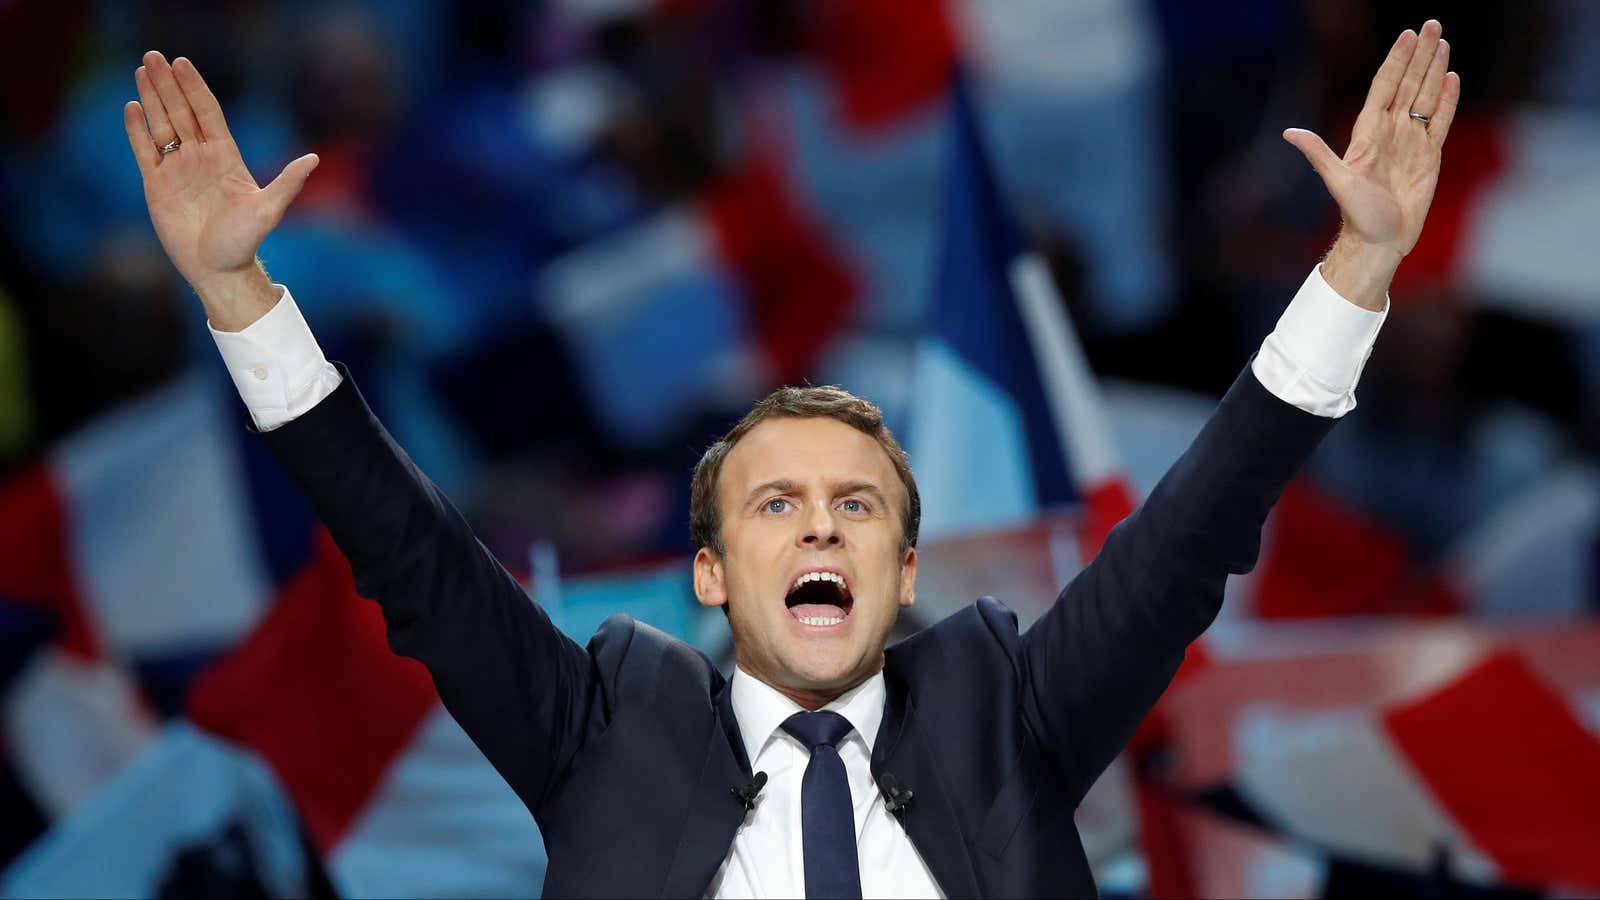 Macron winning hearts—again.